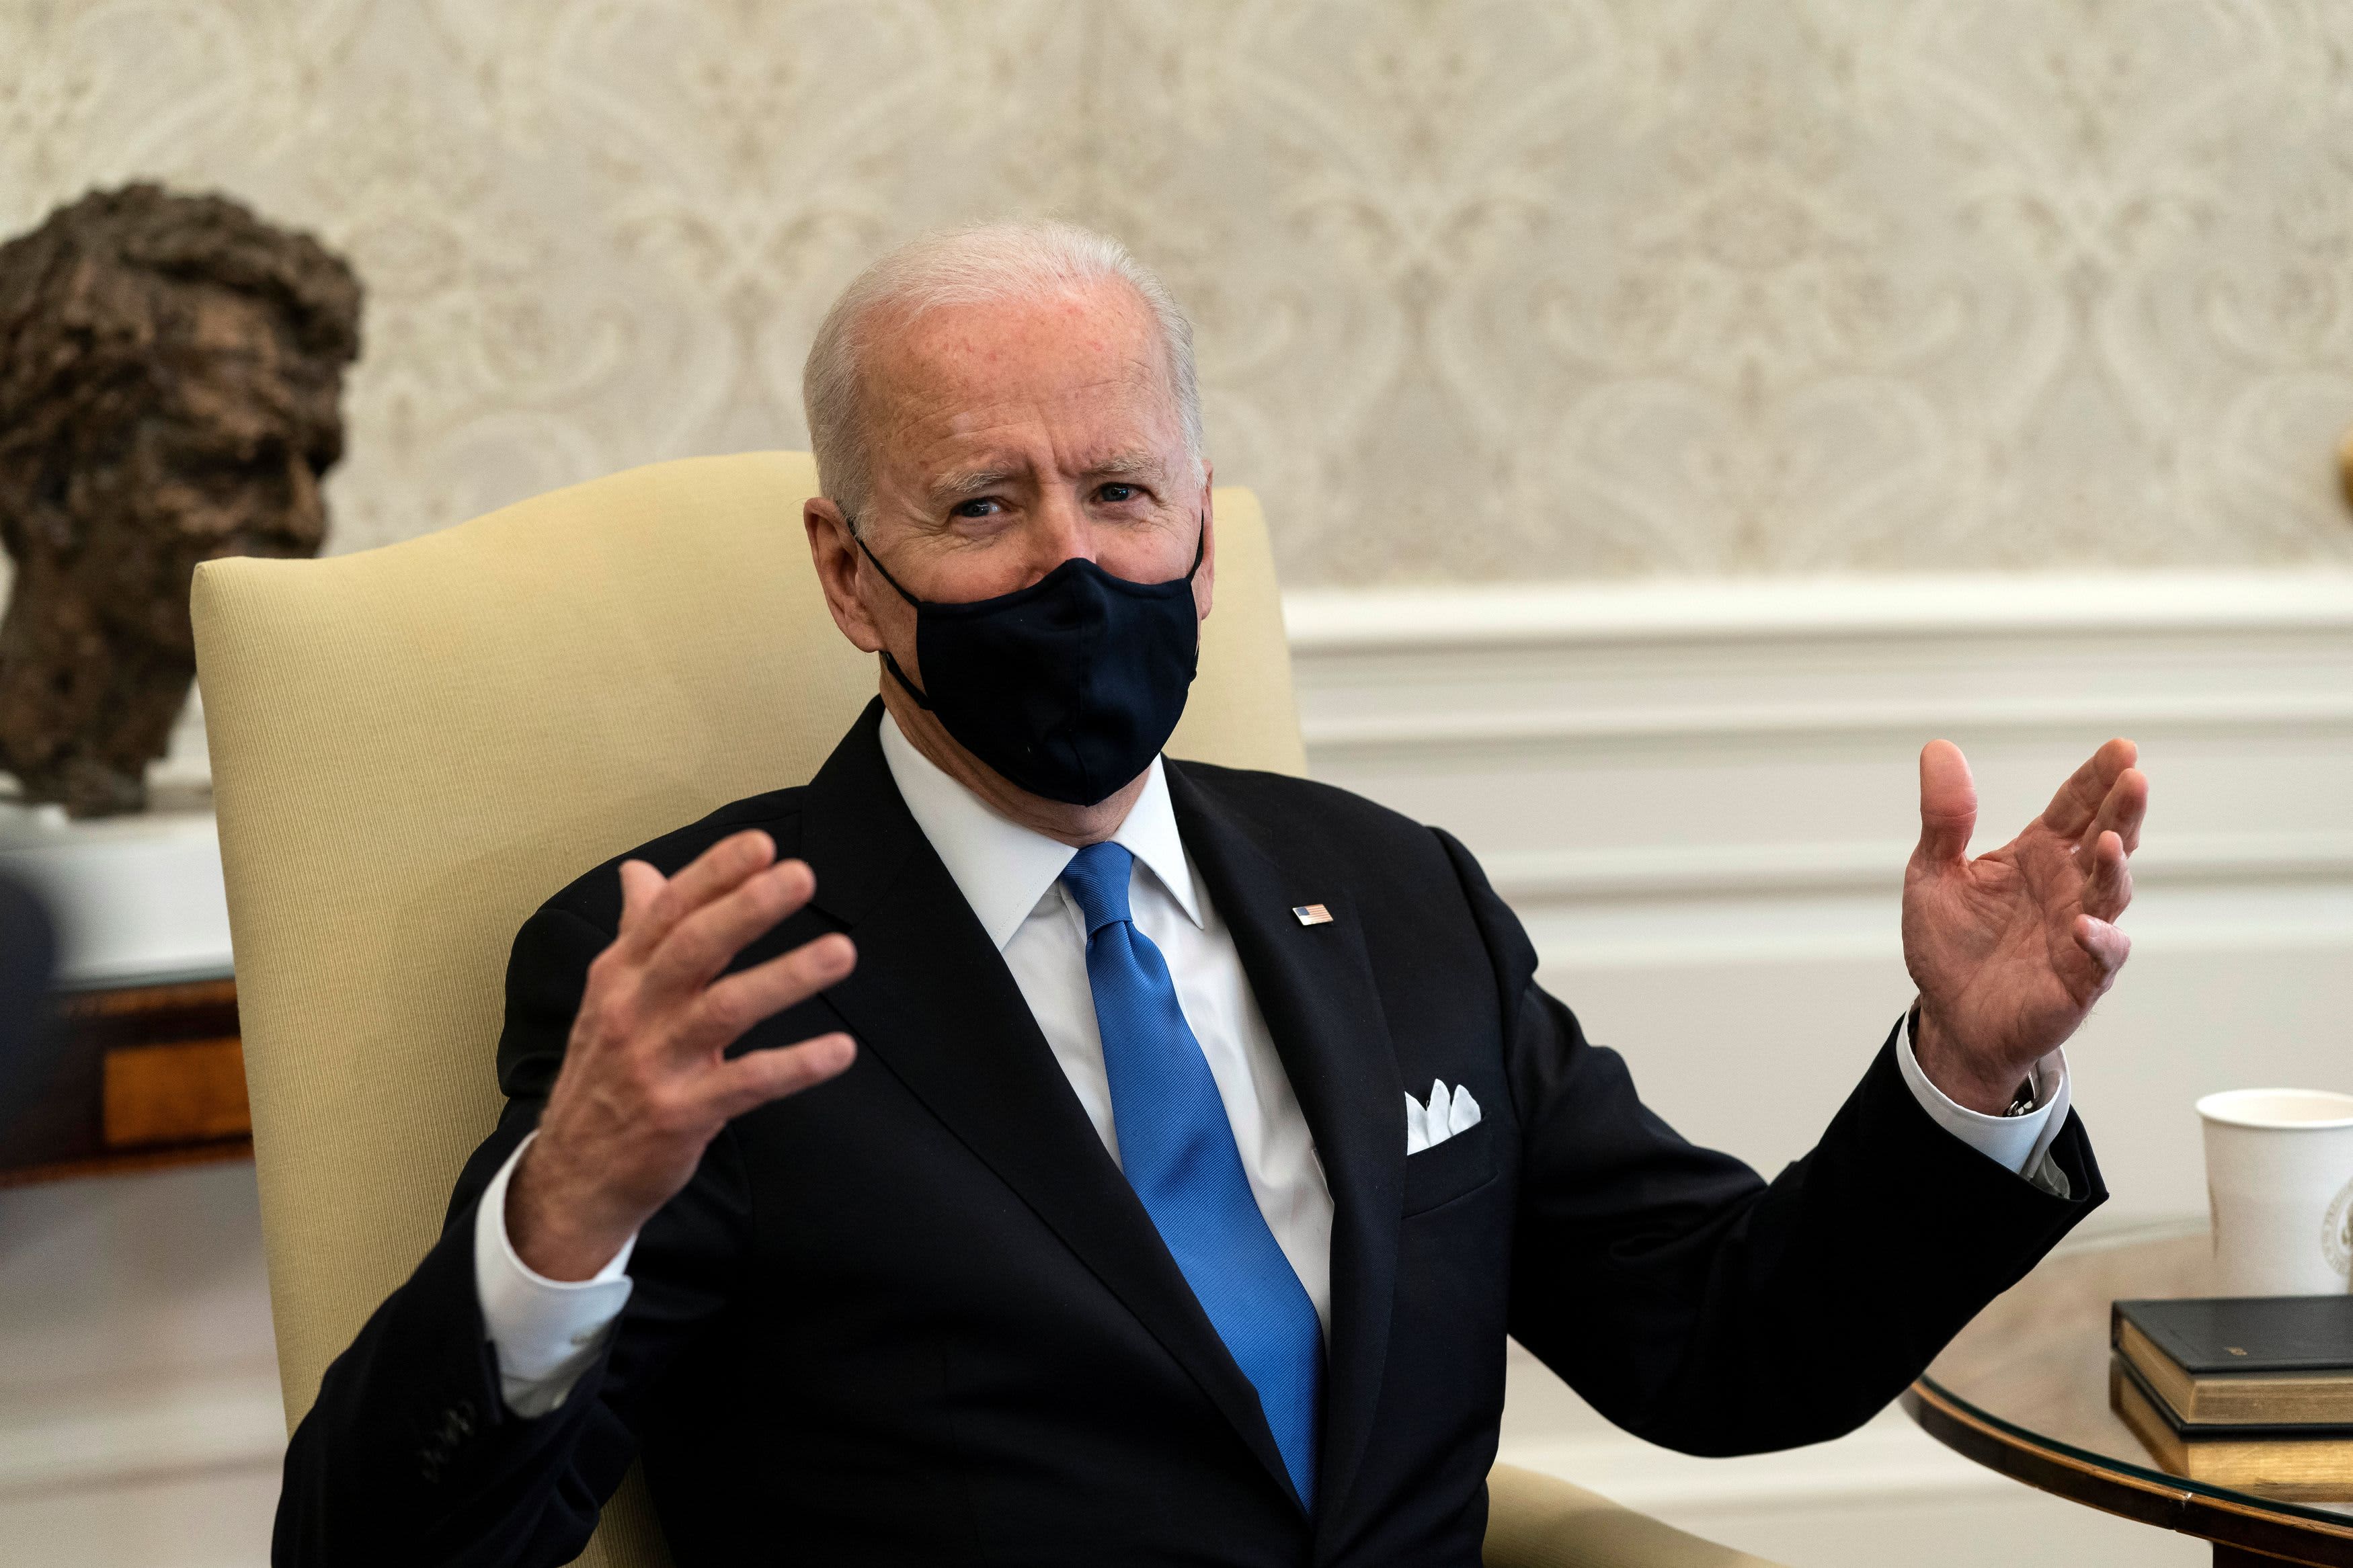 Biden criticizes governors for suspending mask mandates, calls it ‘Neanderthal thinking’